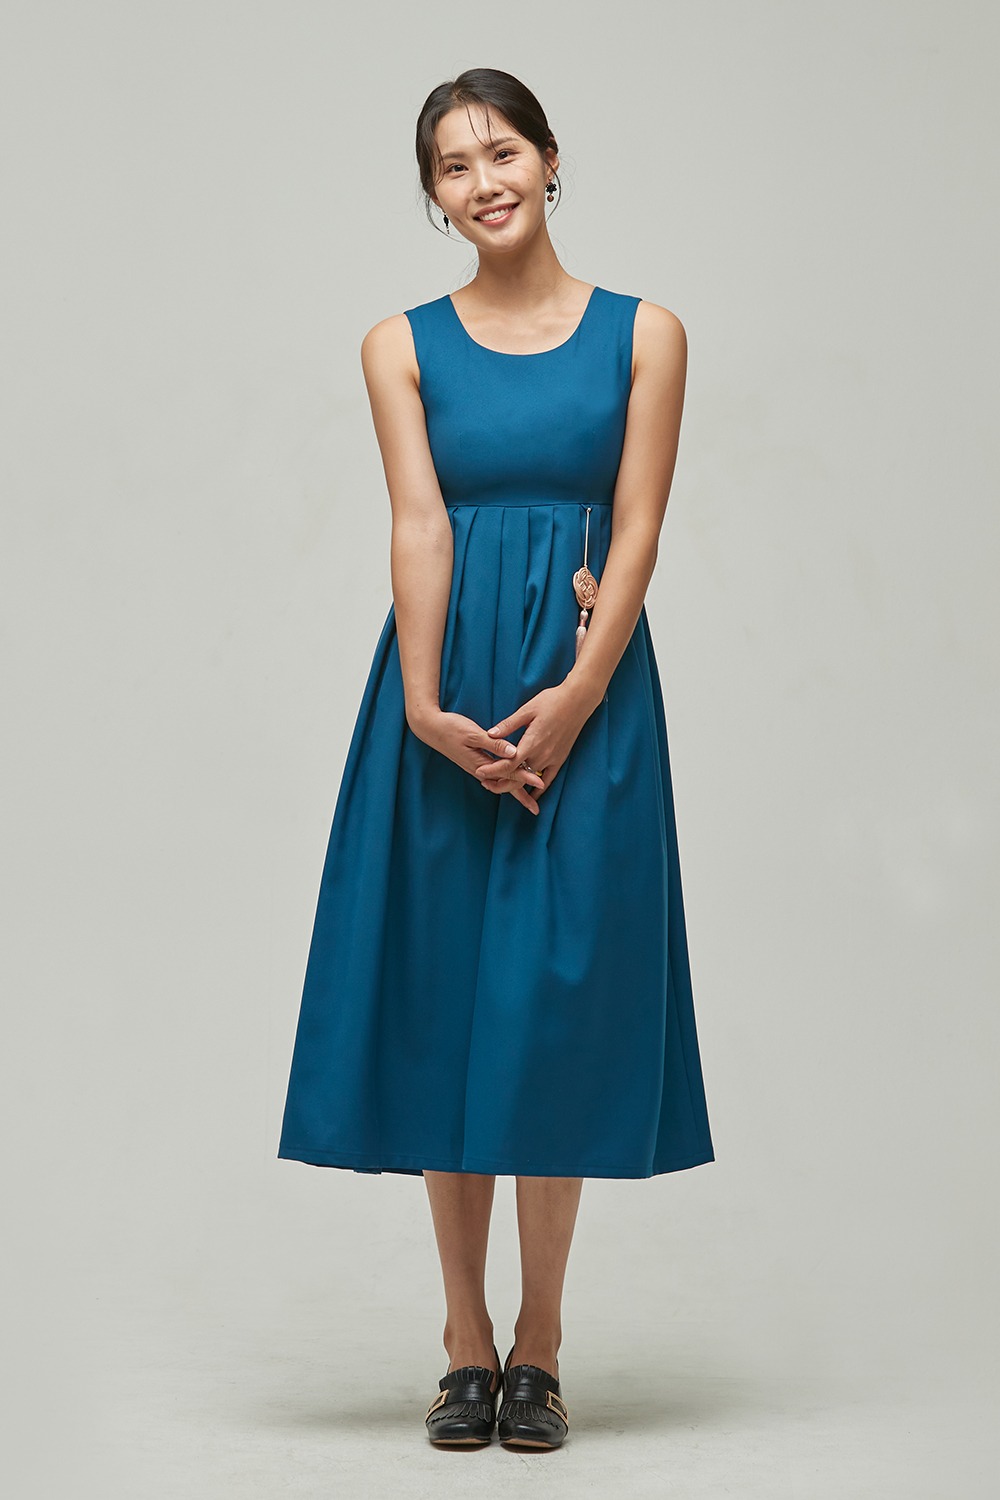 Urban Dress [Blue Green]